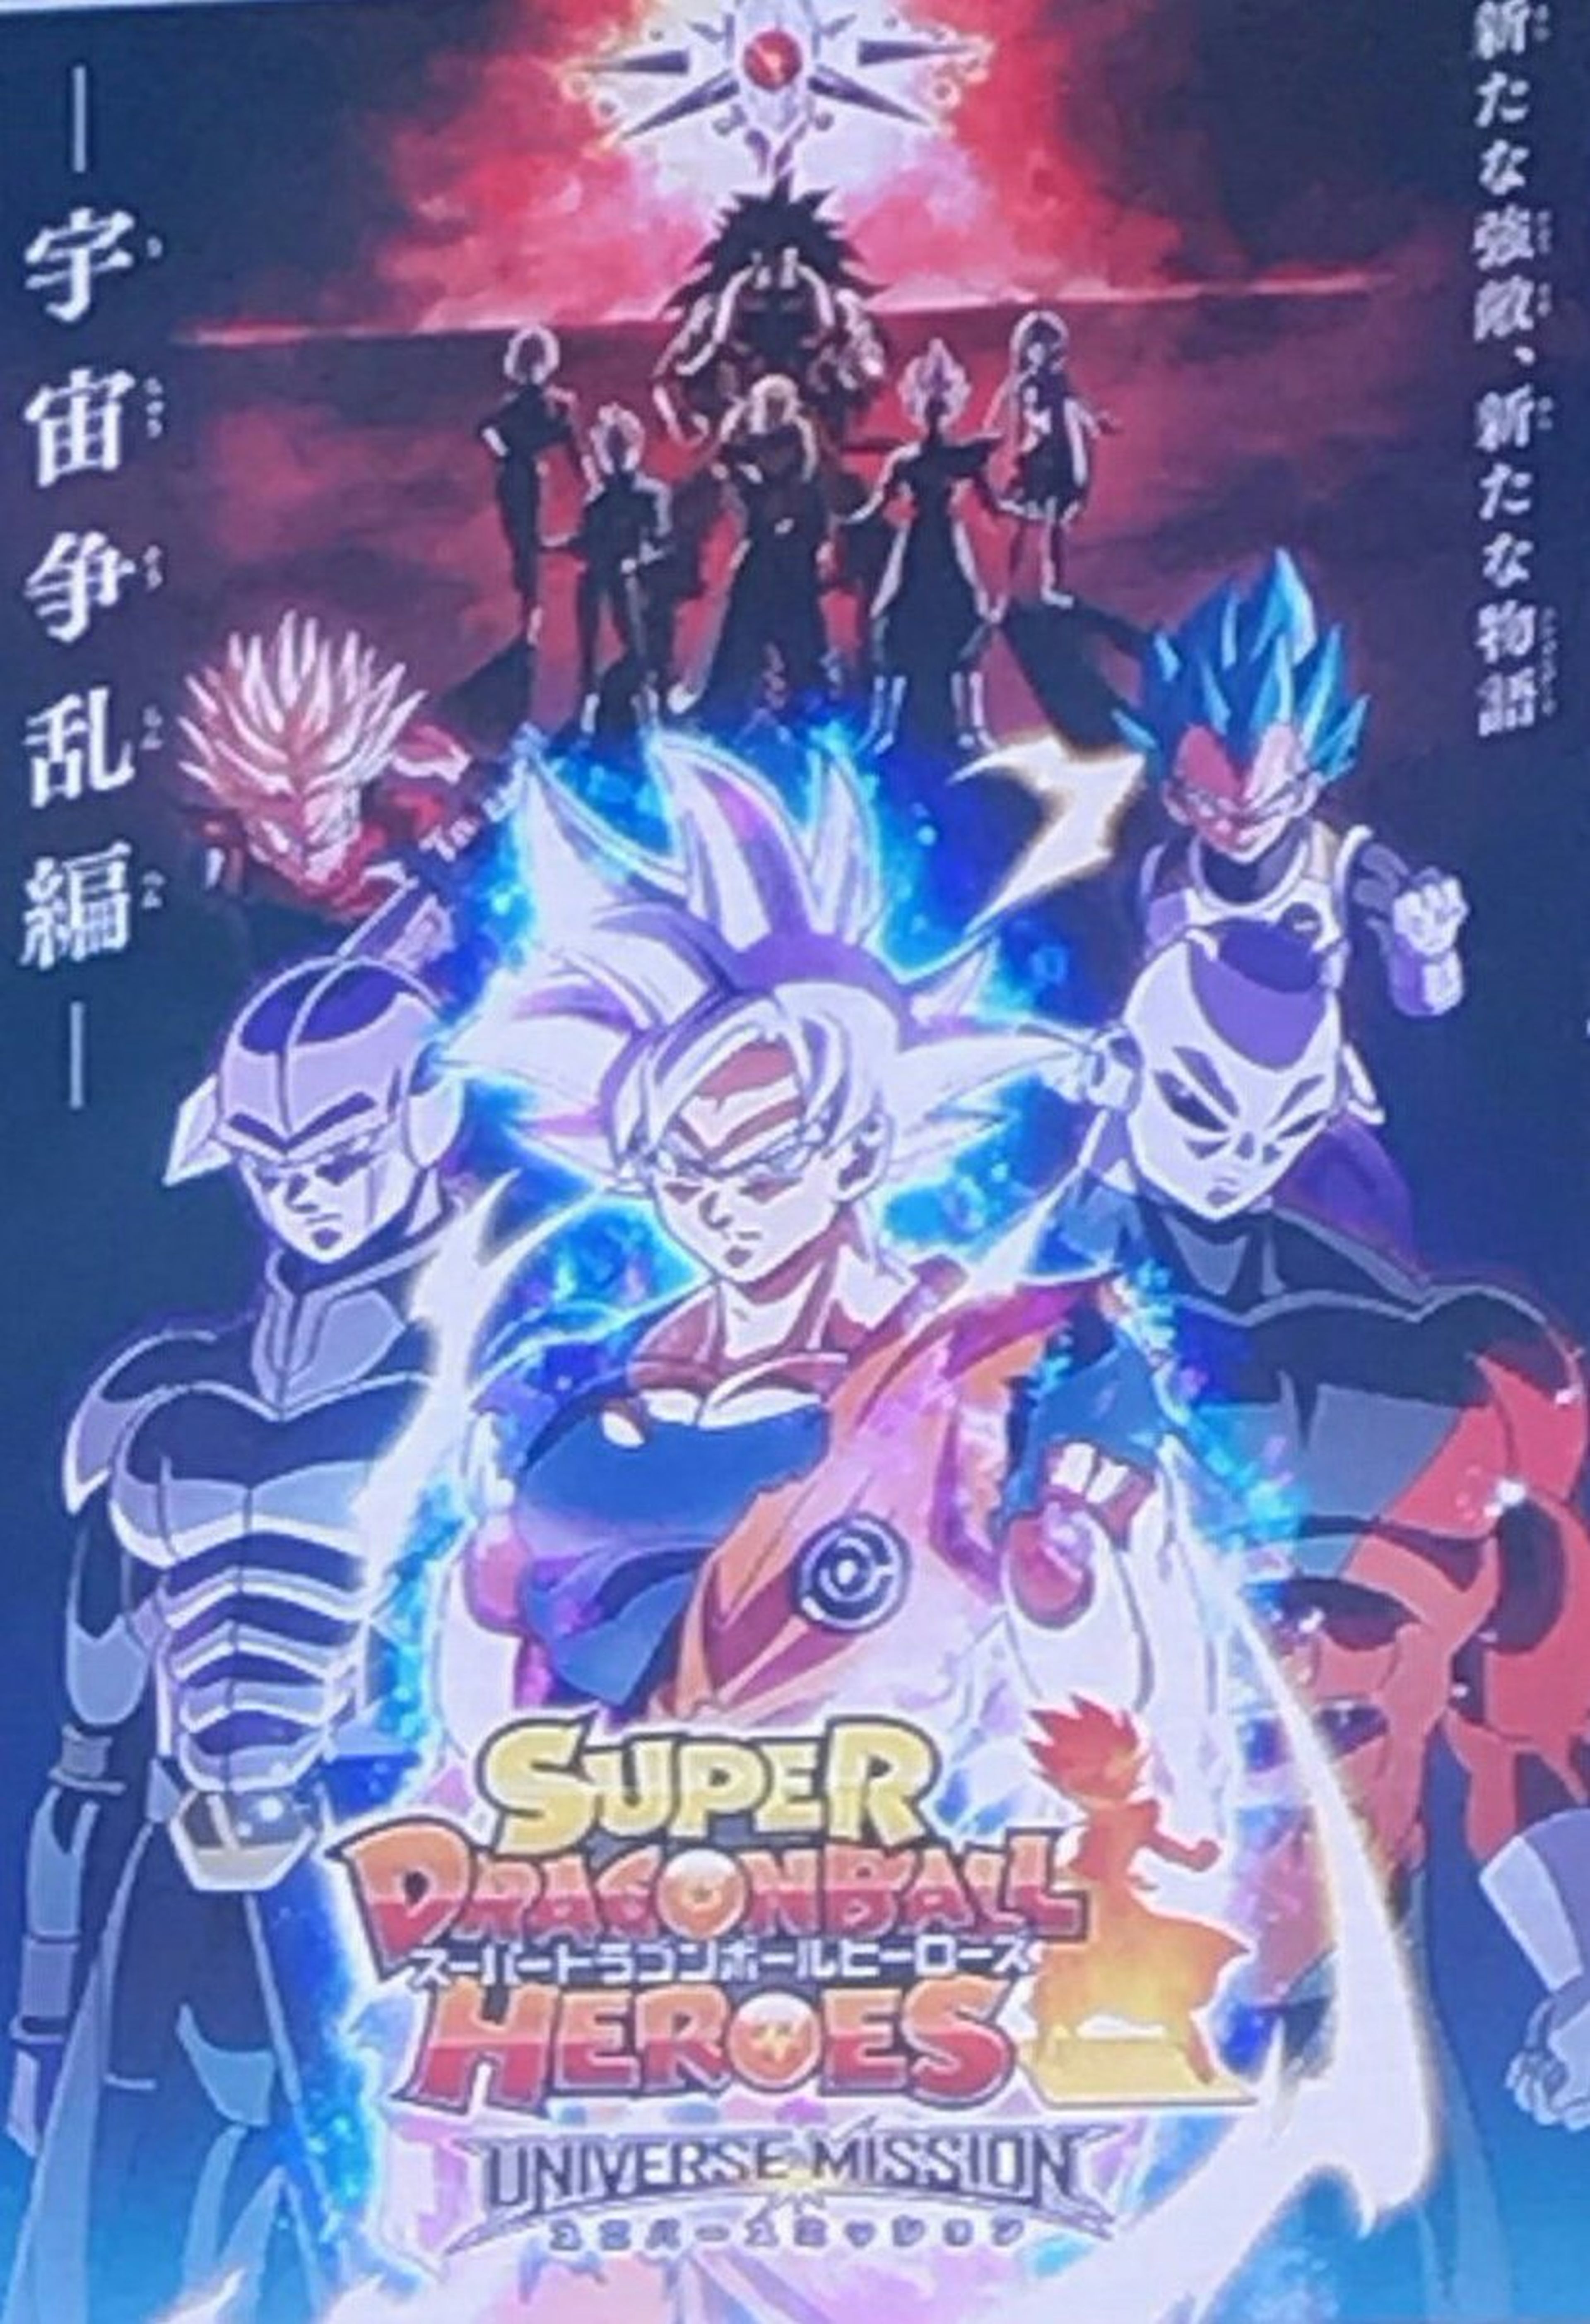 Super Dragon Ball Heroes capítulo 6